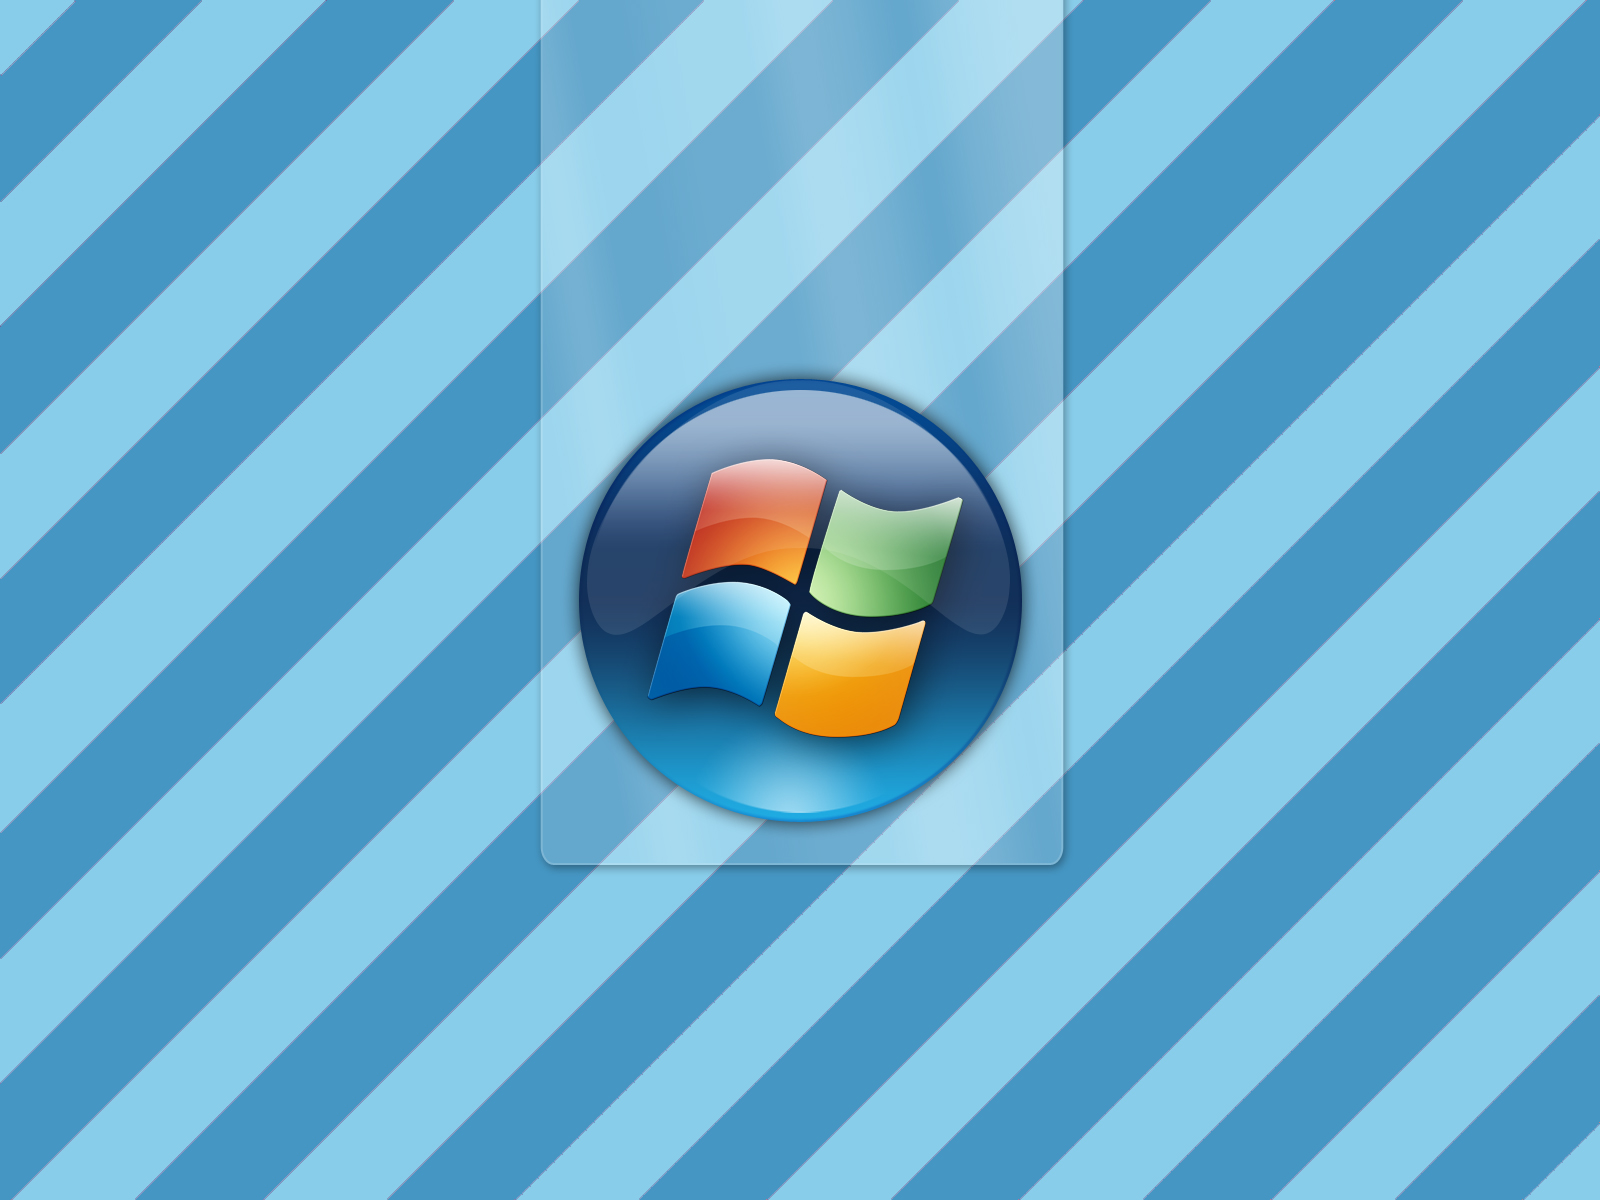 Vista Stripes 壁紙 Windows 7 Vista Xp Picks 壁紙 27753793 ファンポップ